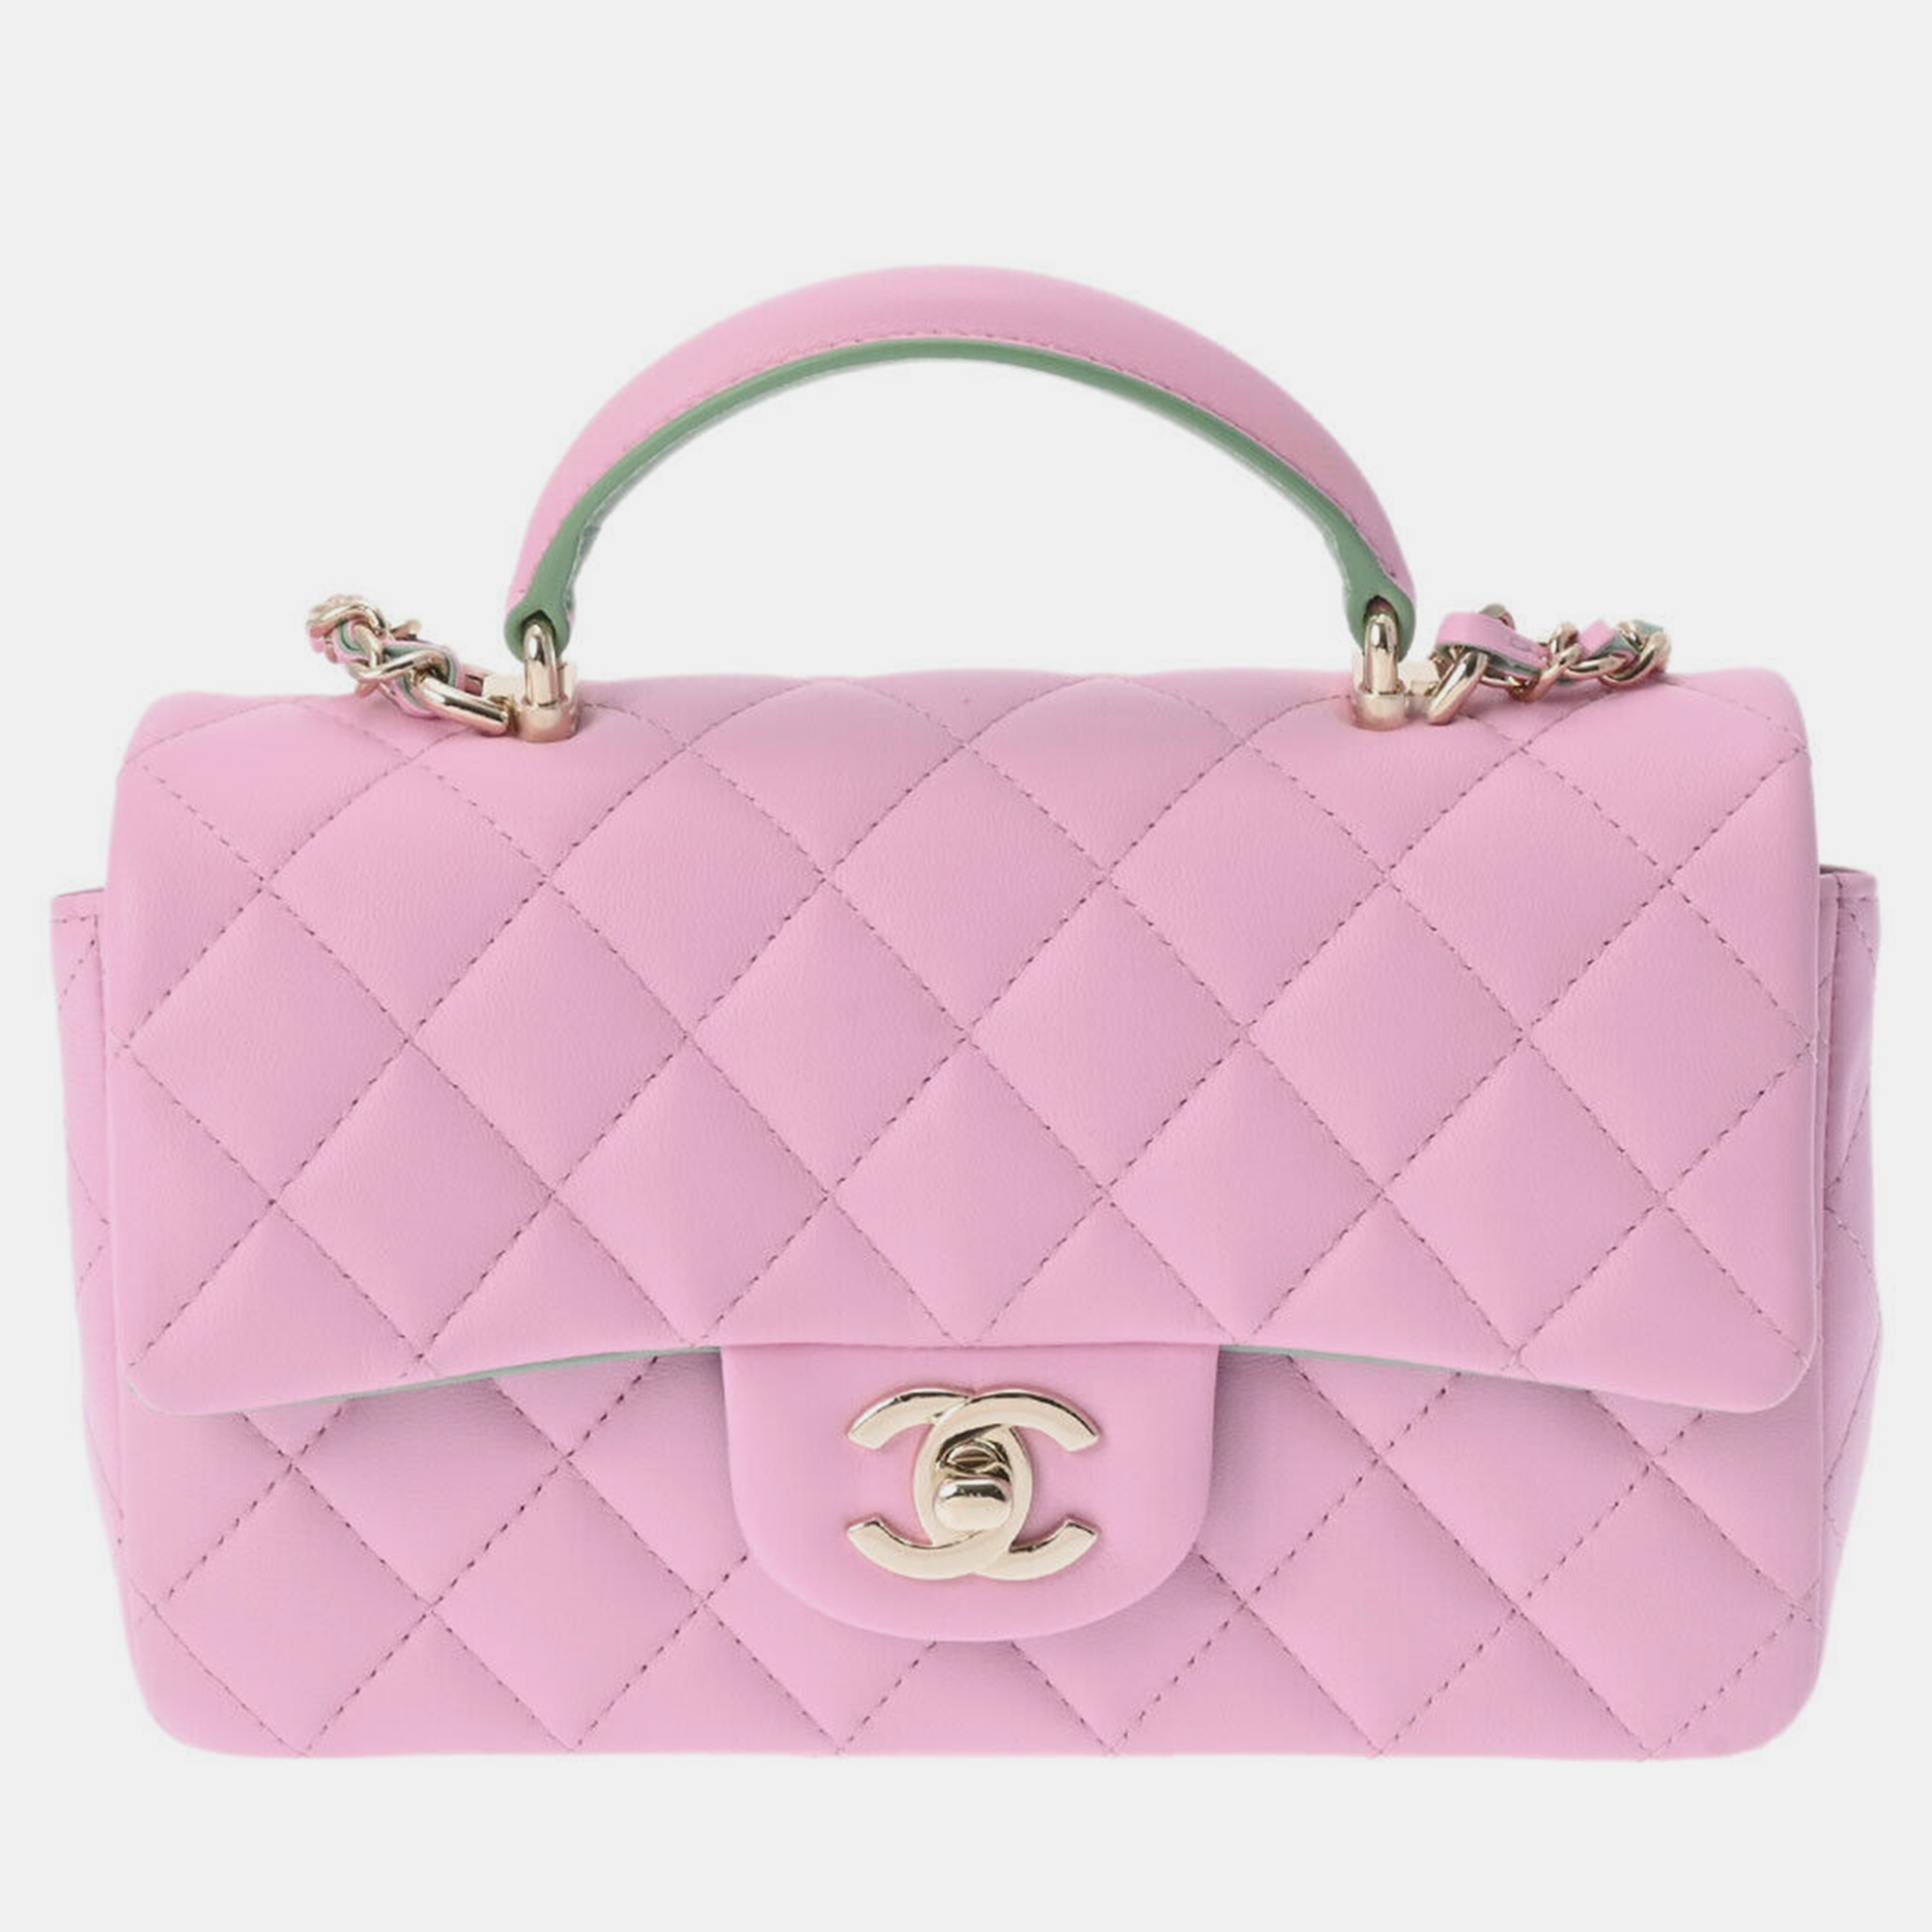 Chanel pink mini top handle flap bag